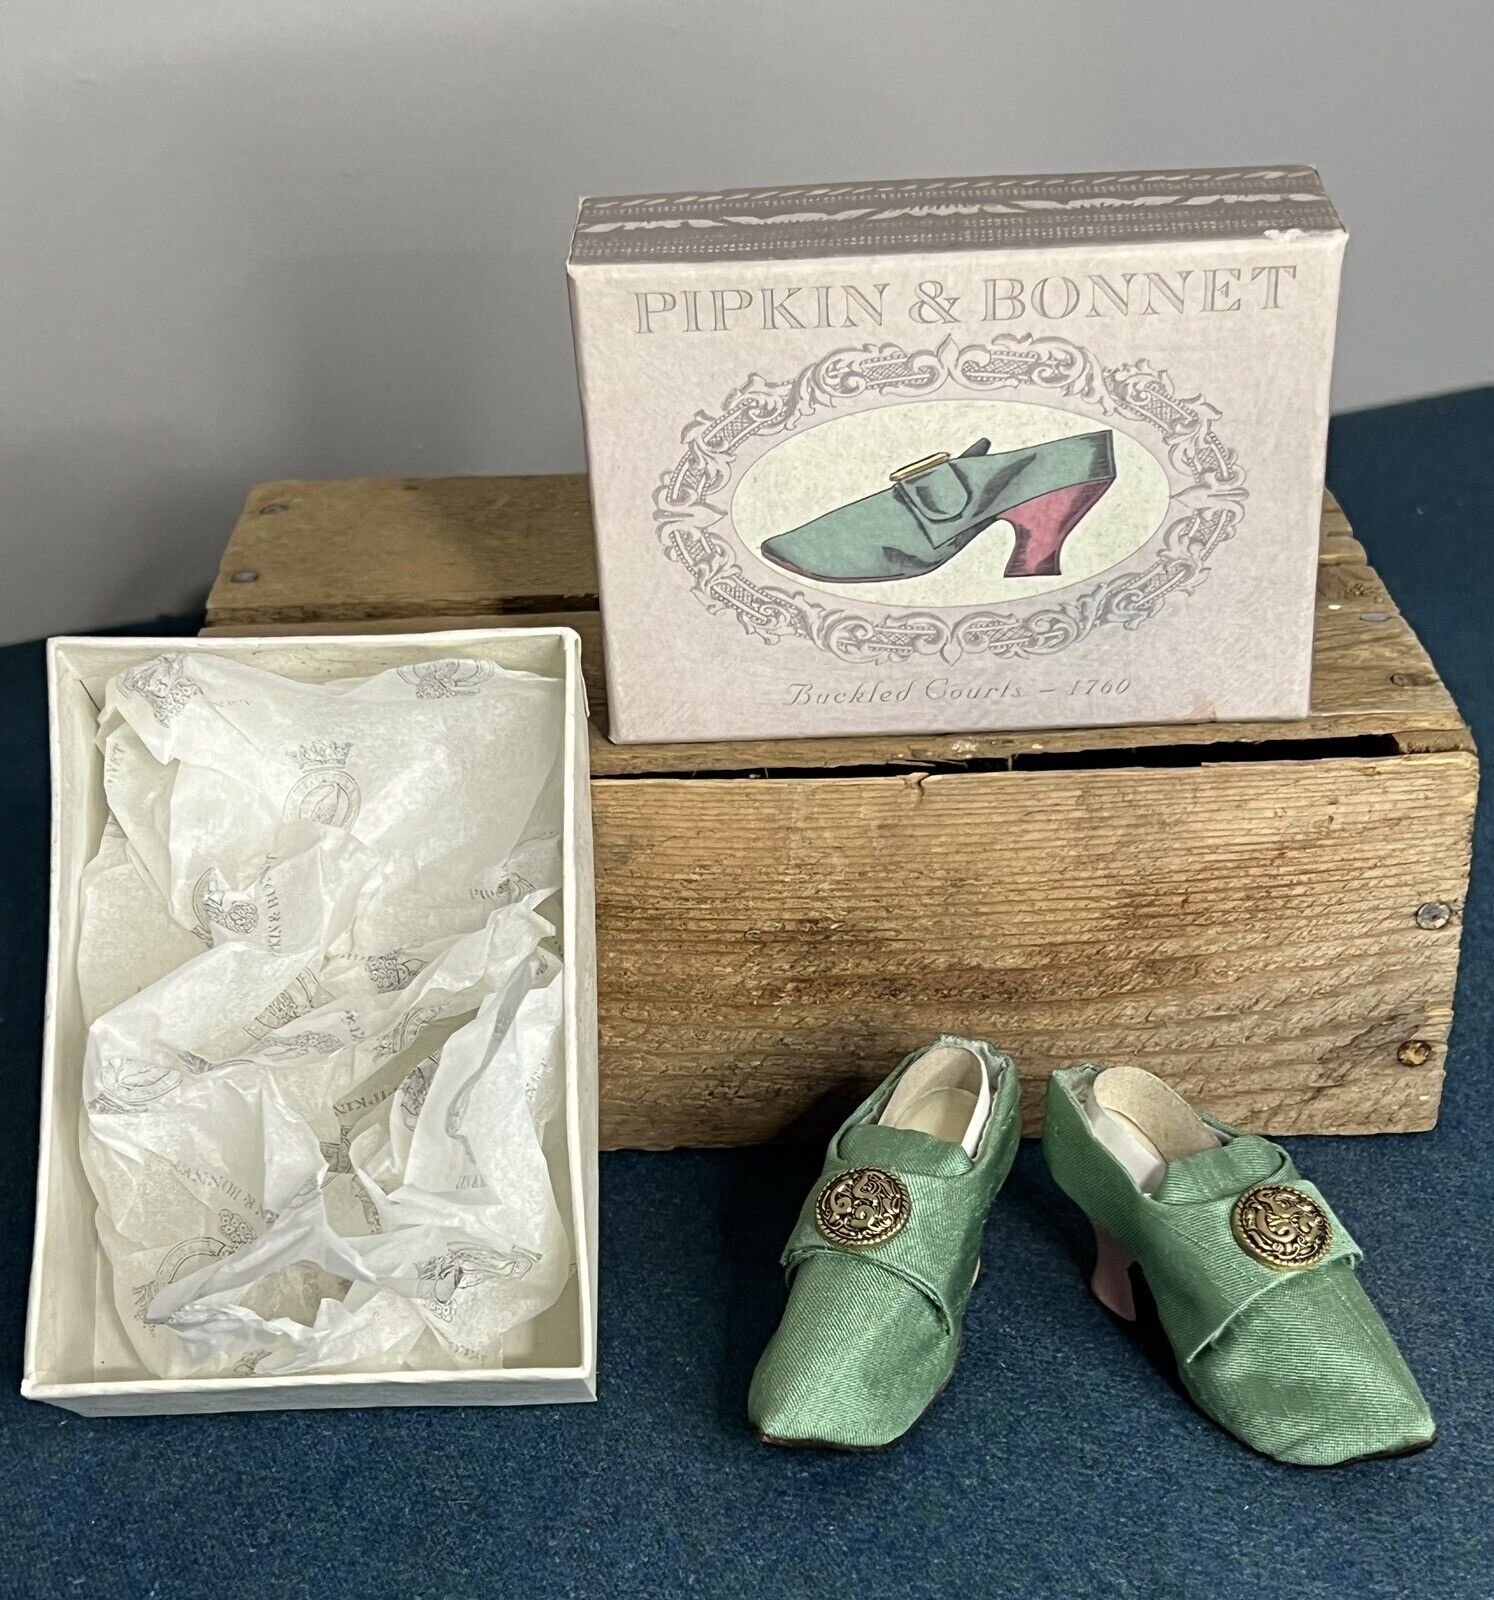 Pipkin & Bonnet Buckled Courts 1760 Doll Shoes Original Box New